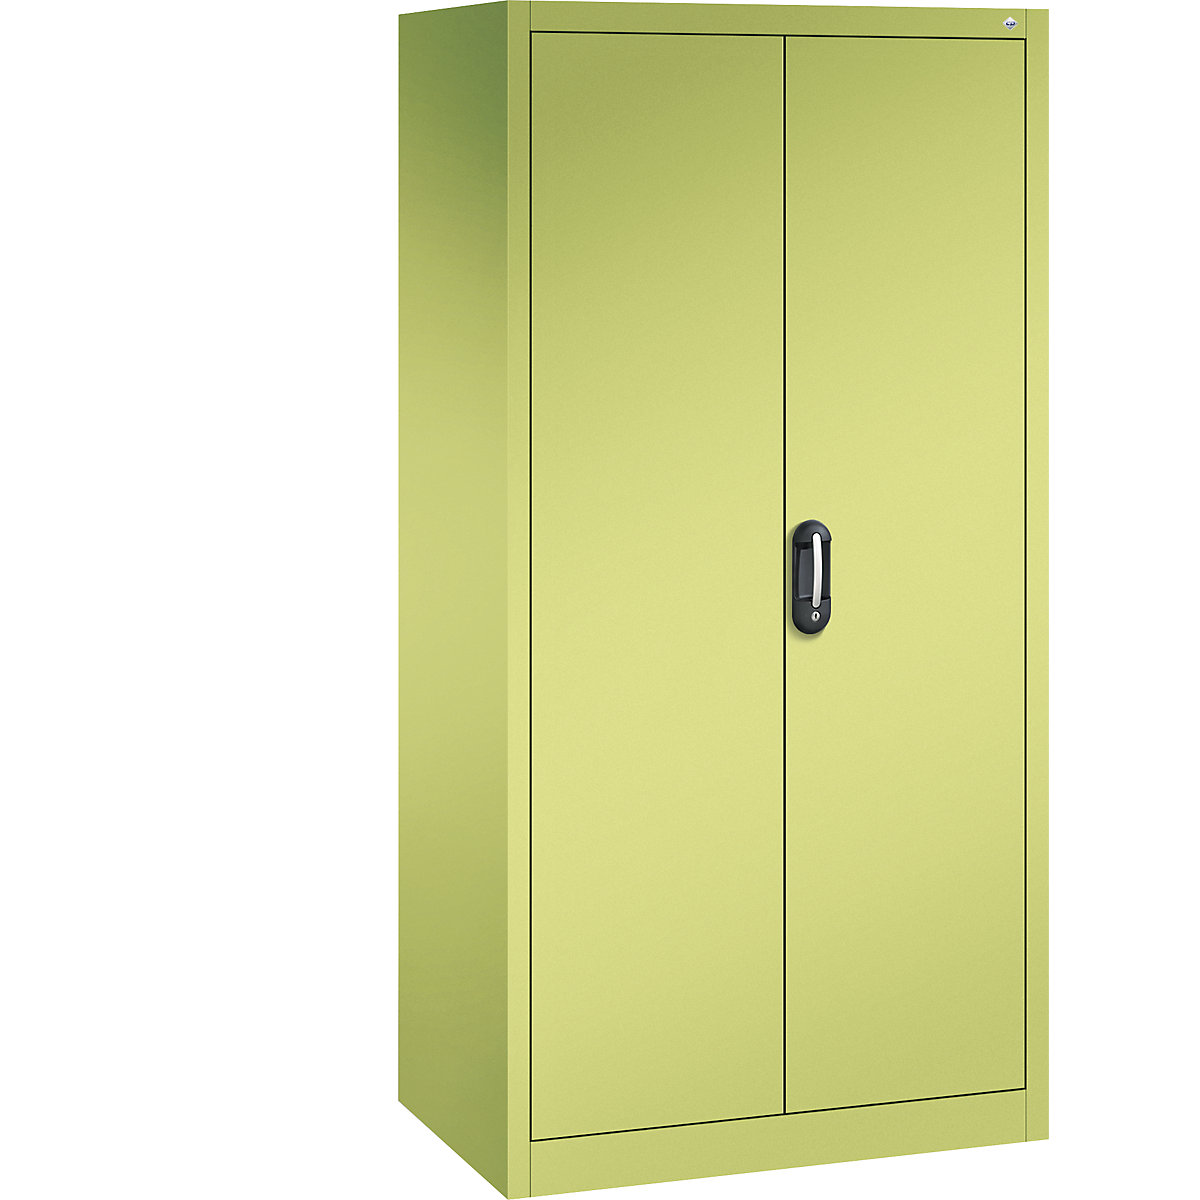 ACURADO universal cupboard – C+P, WxD 930 x 600 mm, viridian green / viridian green-13